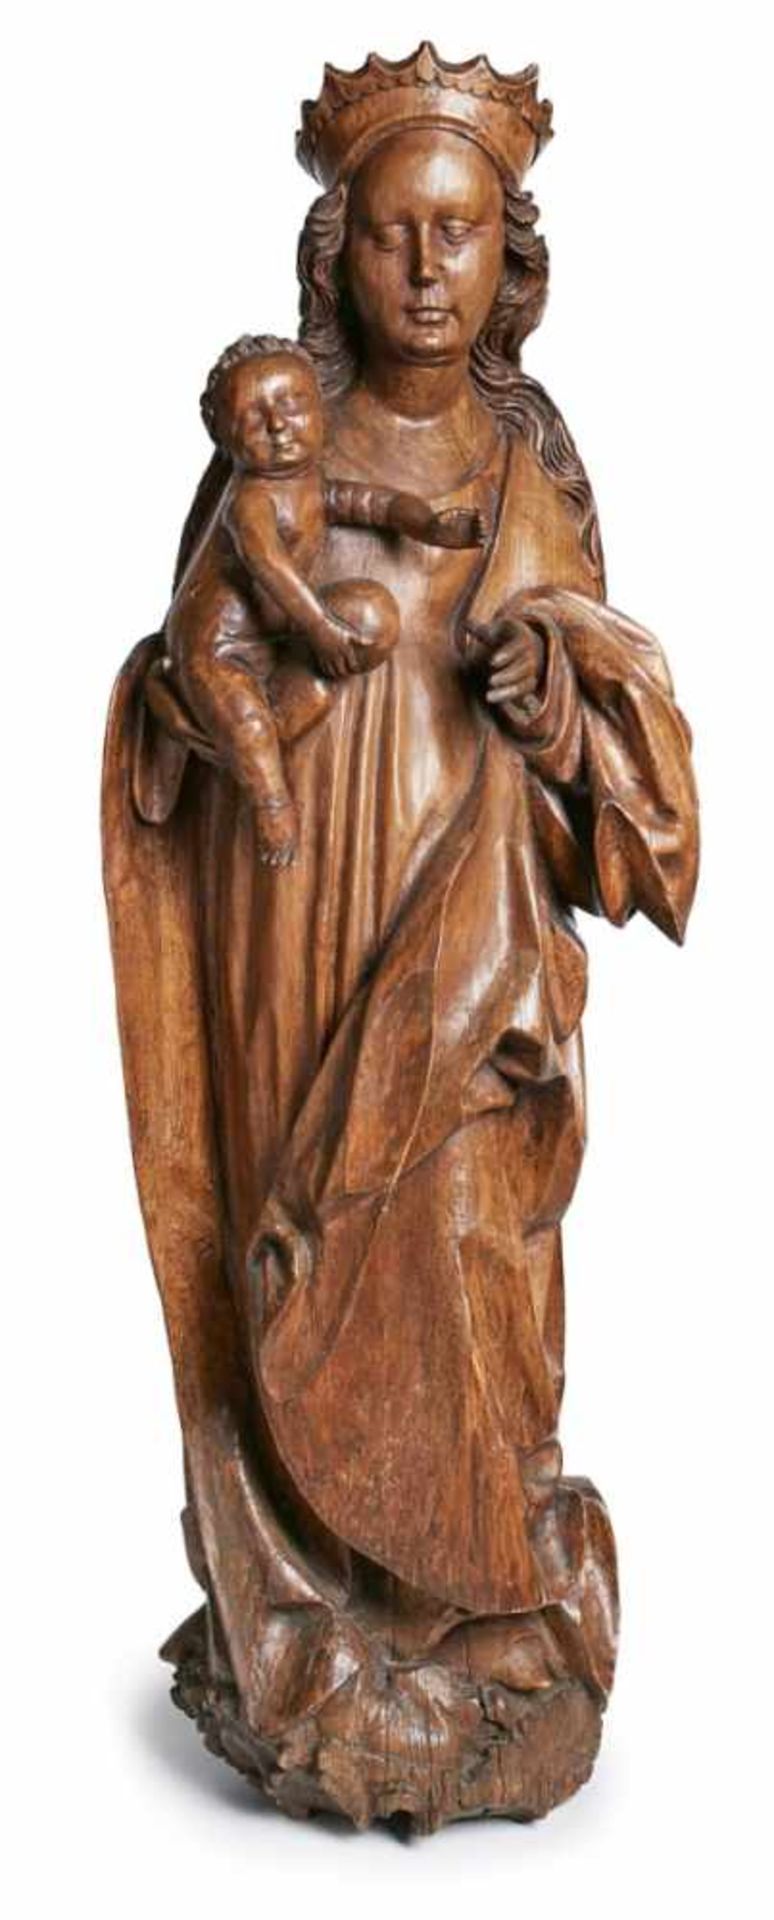 Gr. Skulptur "Madonna mit dem Knaben",Nürnberg um 1515-20, Umkreis/Werkstatt Veit Stoss.